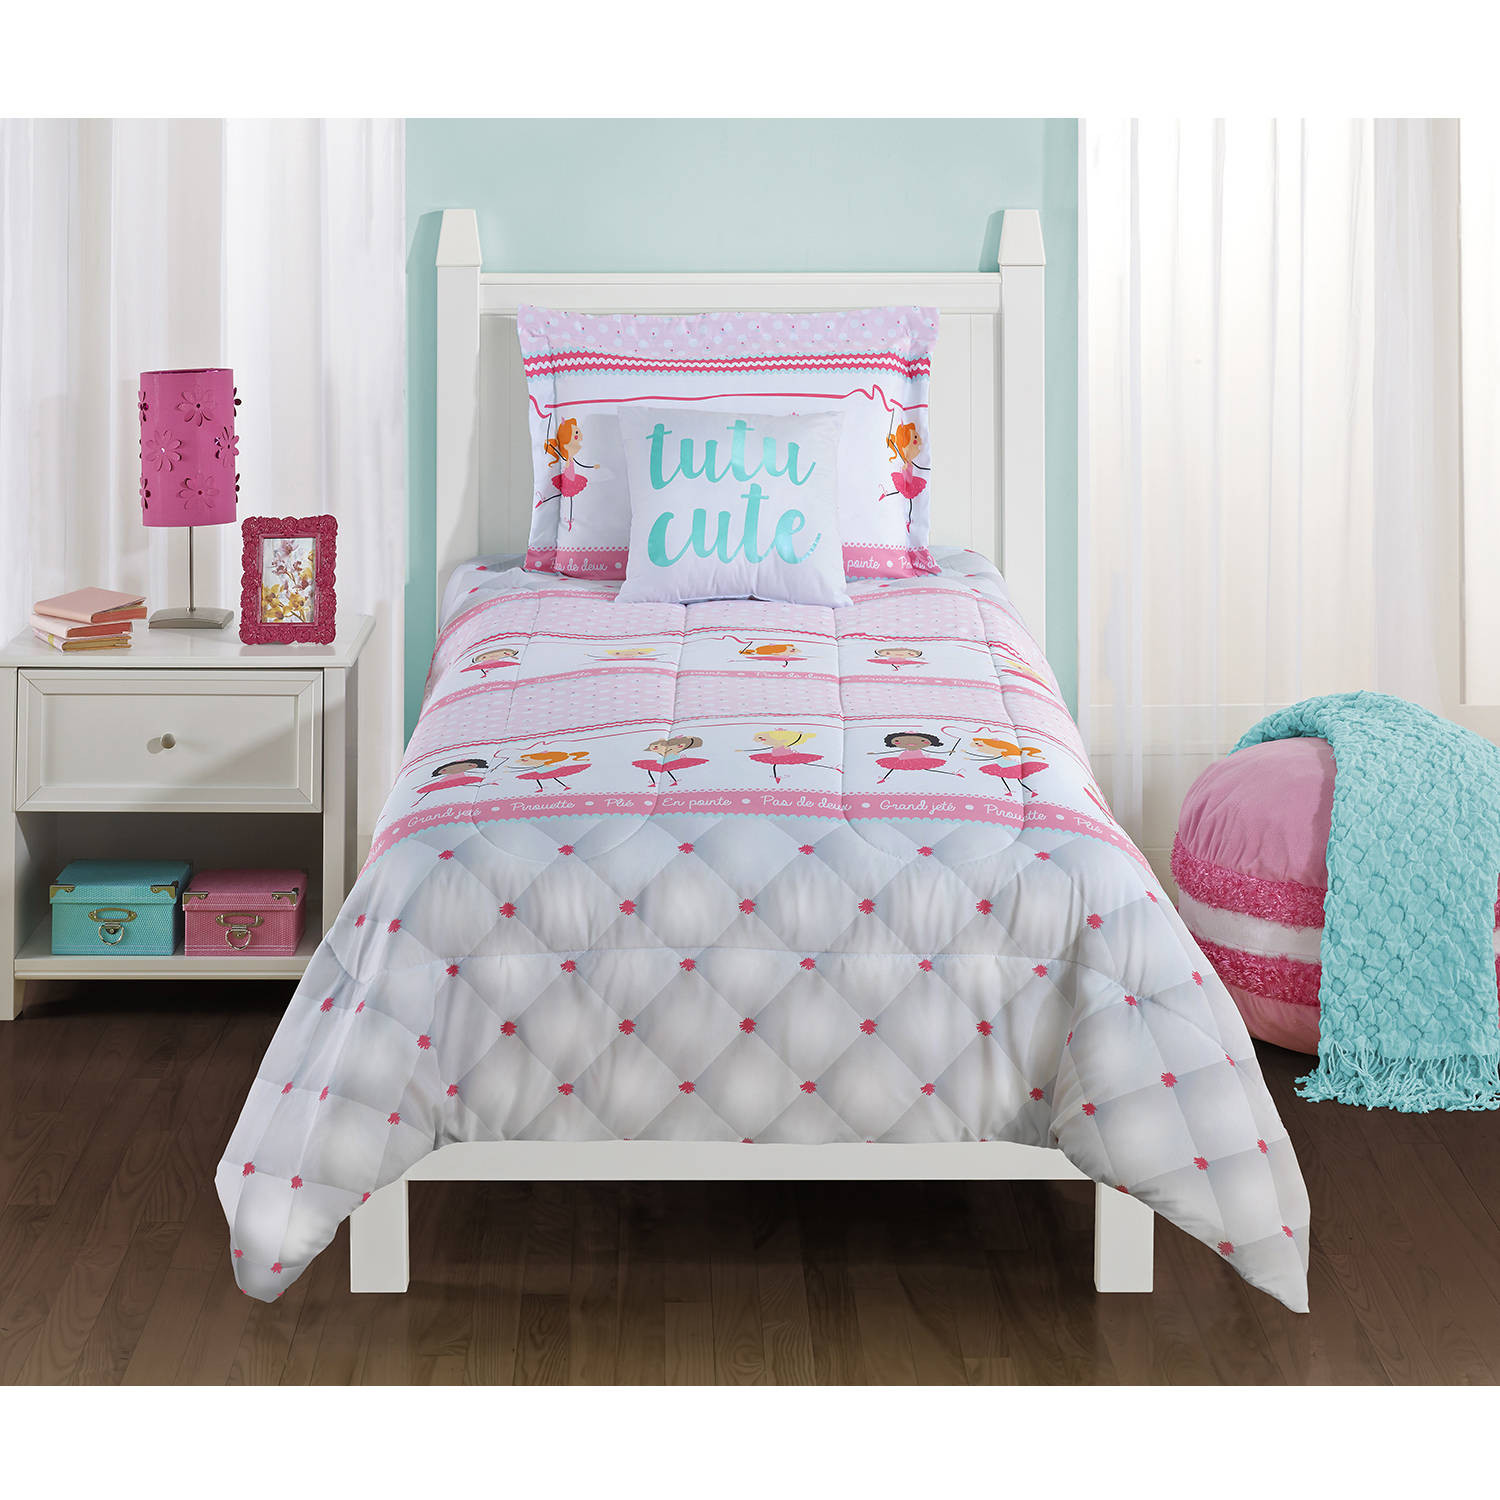 Walmart Girl Bedroom Sets
 Mainstays Bedding Walmart